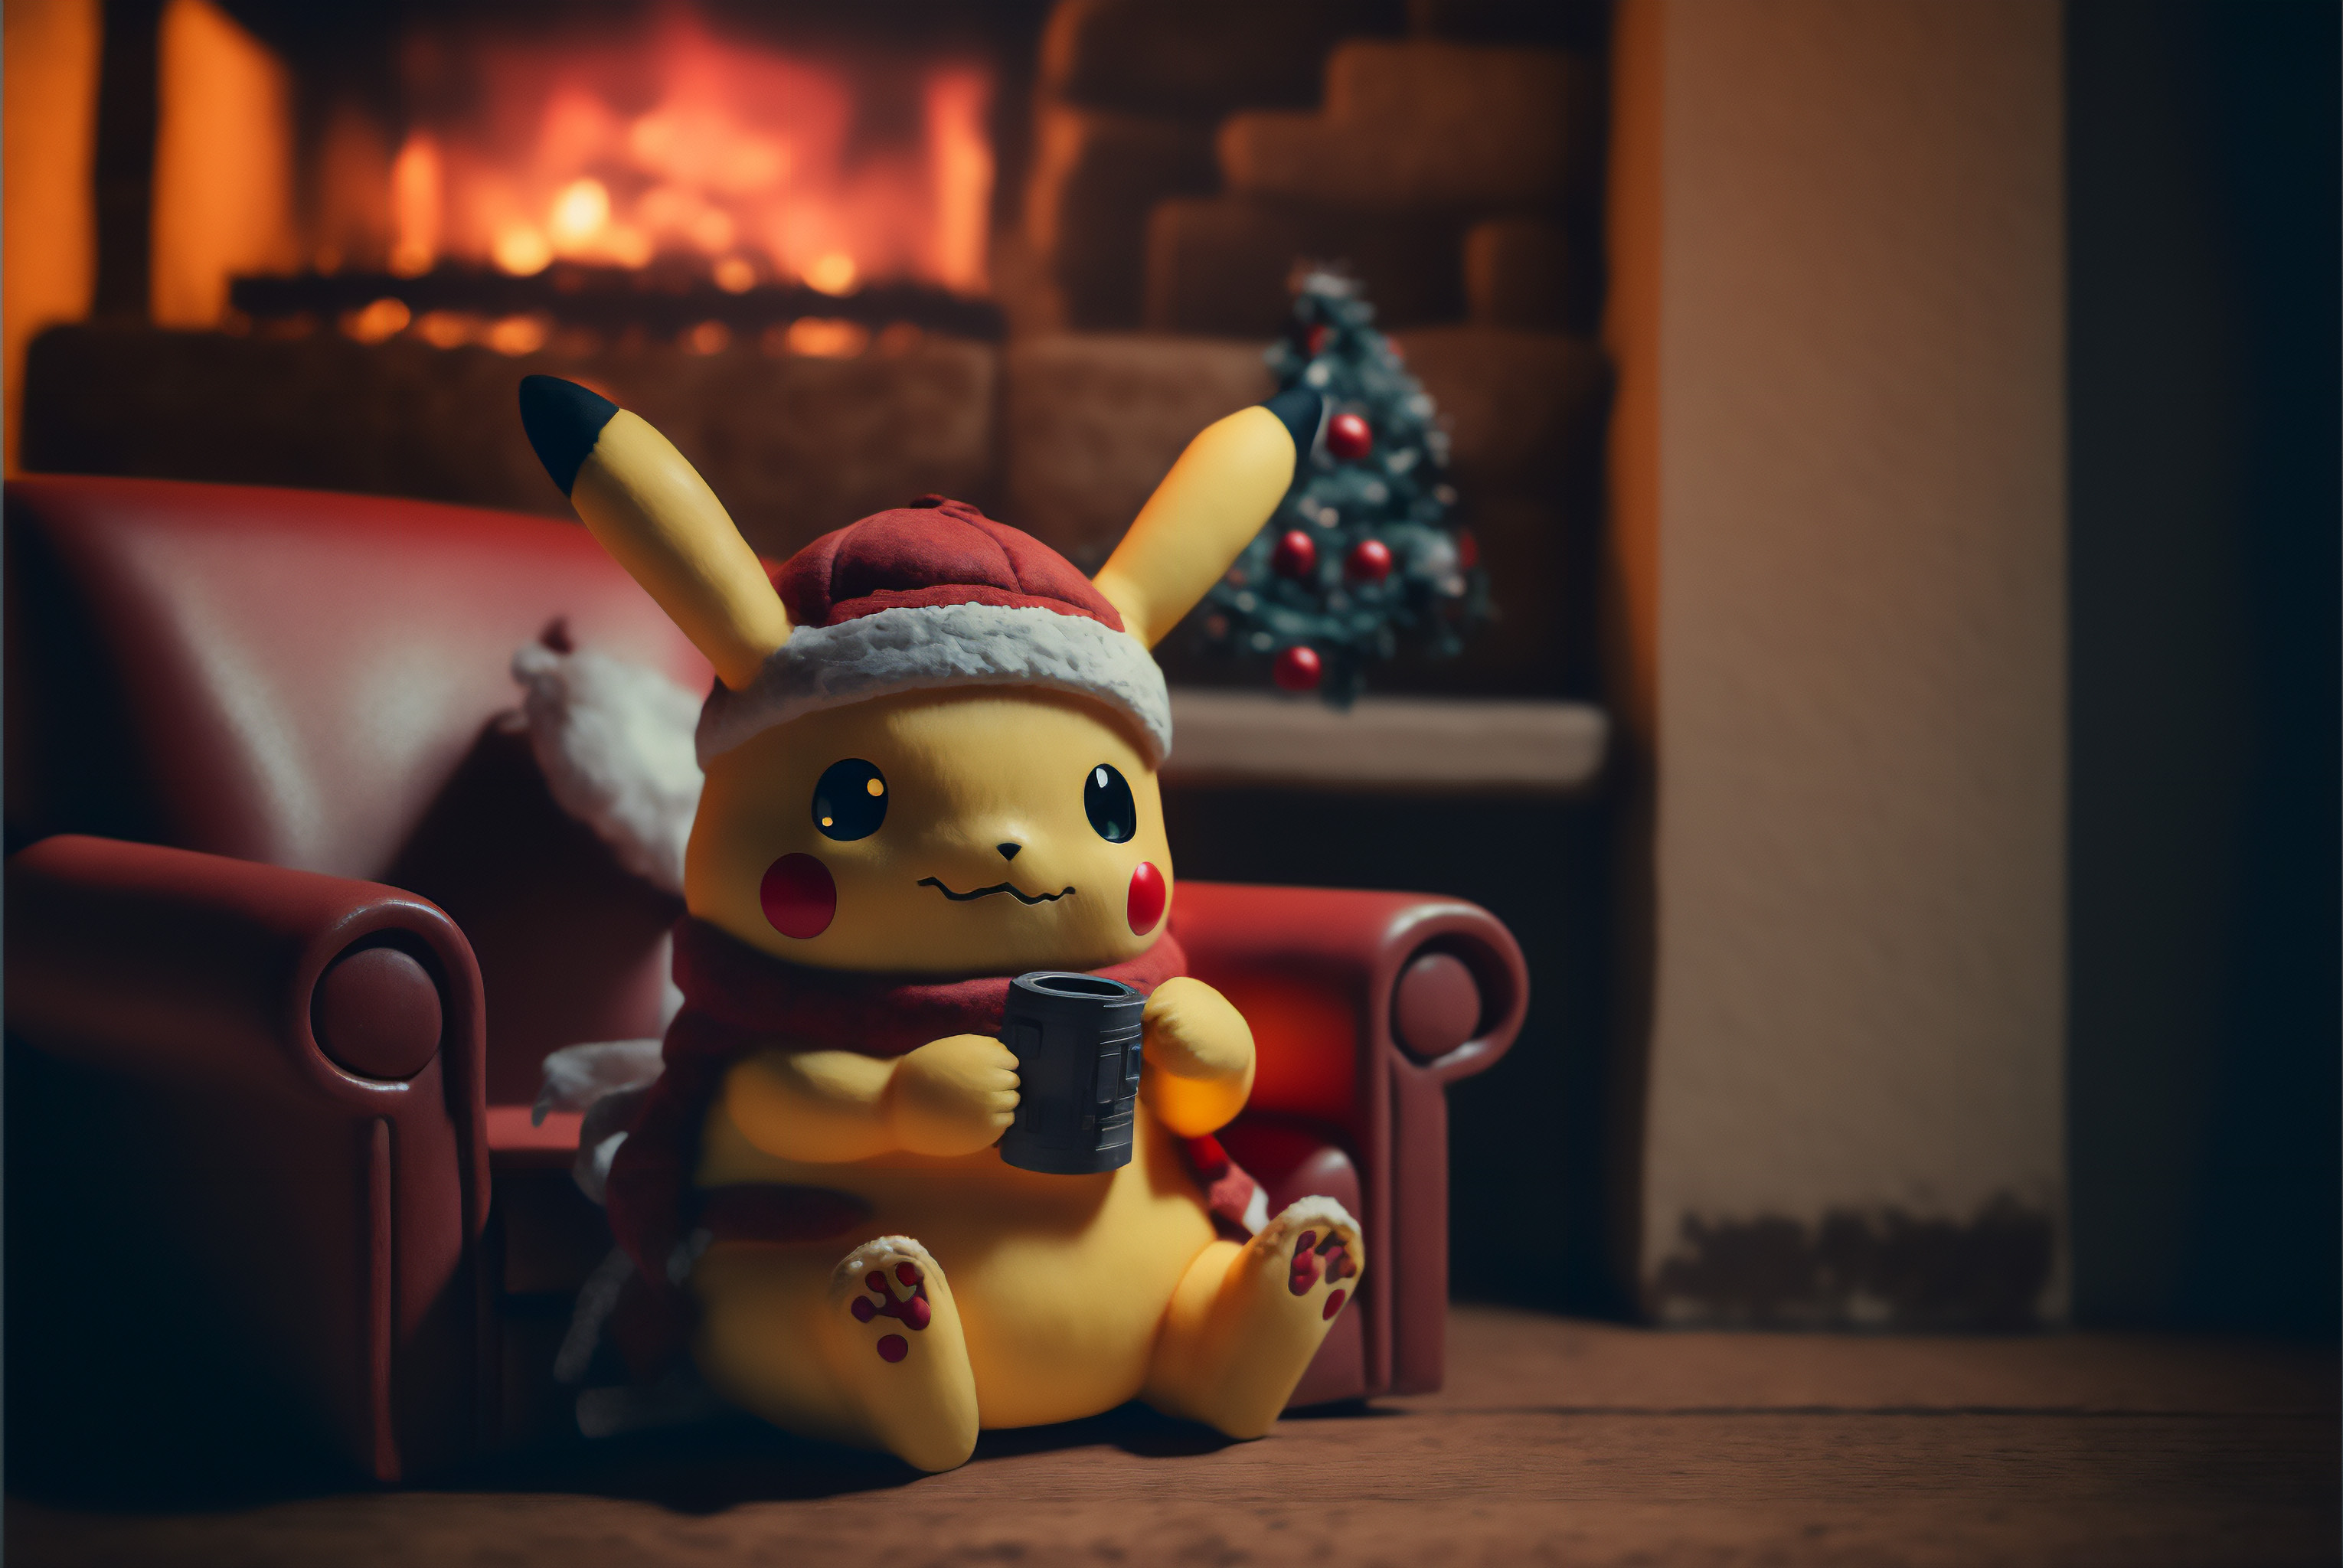 General 3060x2048 AI art Pikachu Pokémon Christmas interior scarf Christmas tree fireplace video game characters